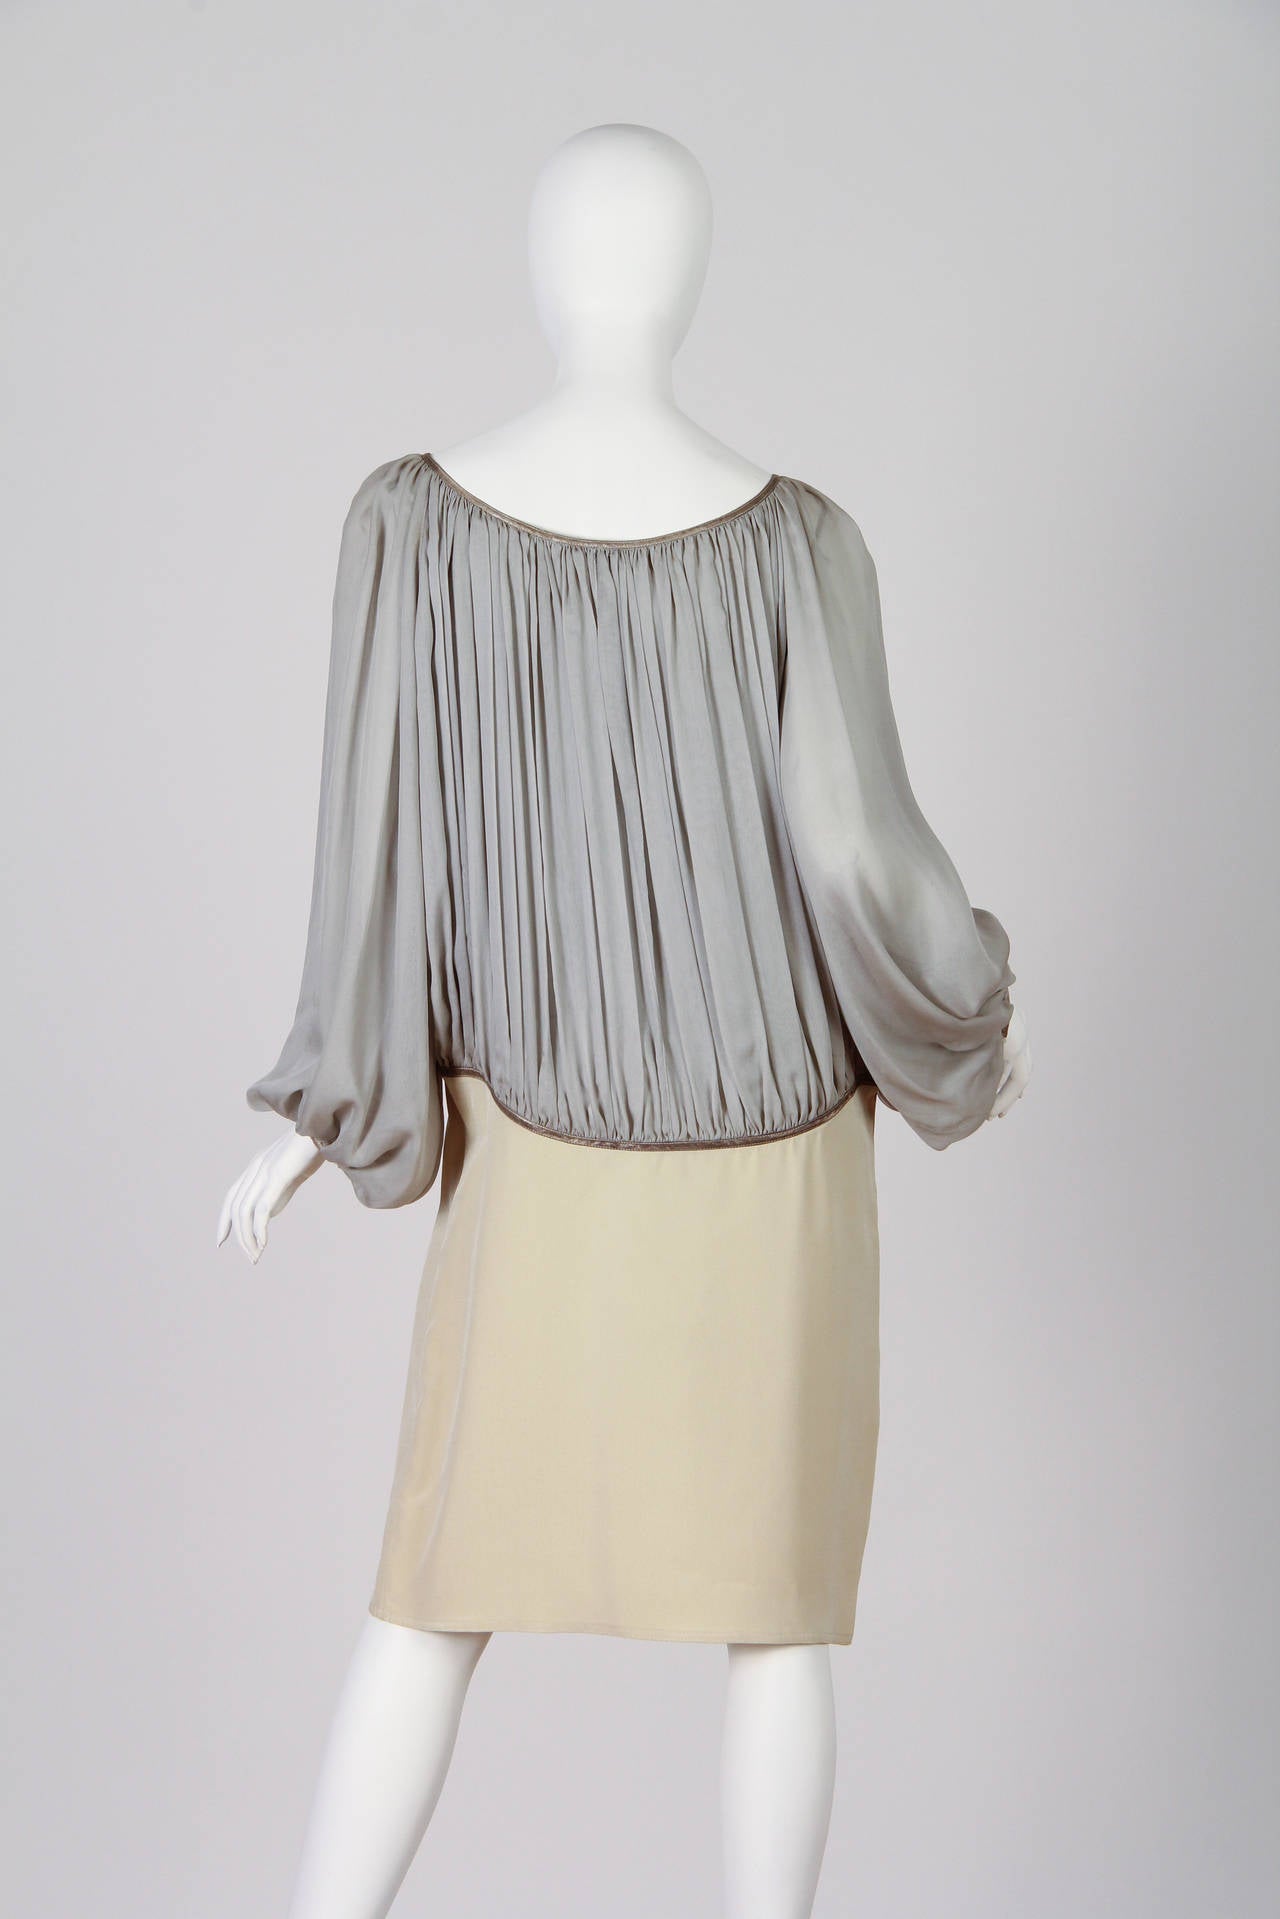 Women's 1980S GEOFFREY BEENE Cream & Grey Silk Chiffon Crepe Dress With Metallic Details